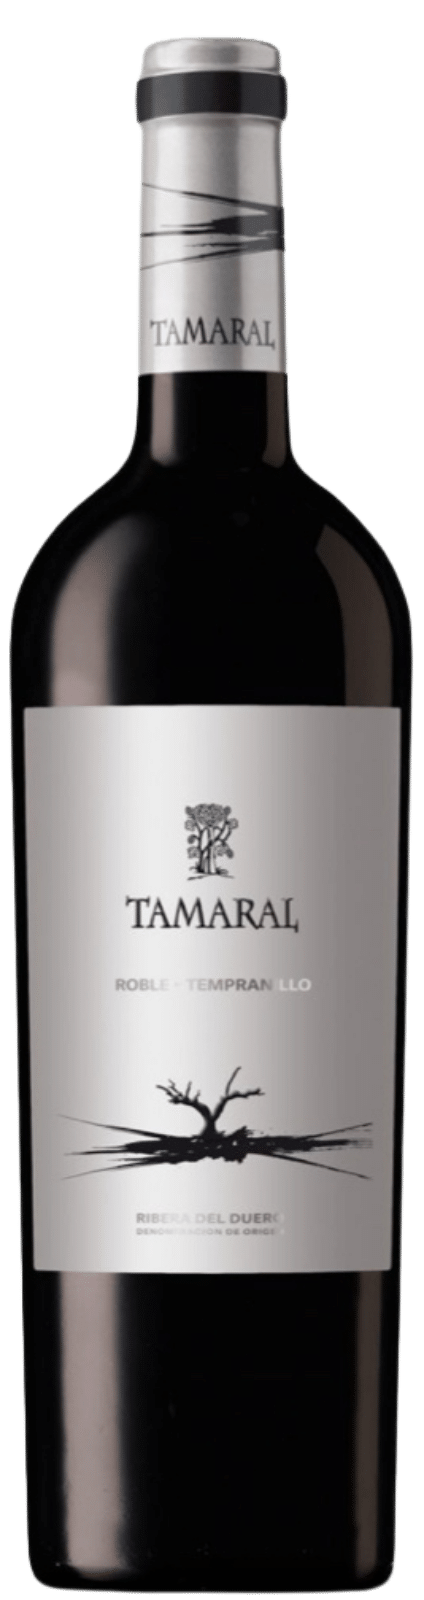 Tamaral – Roble 2018